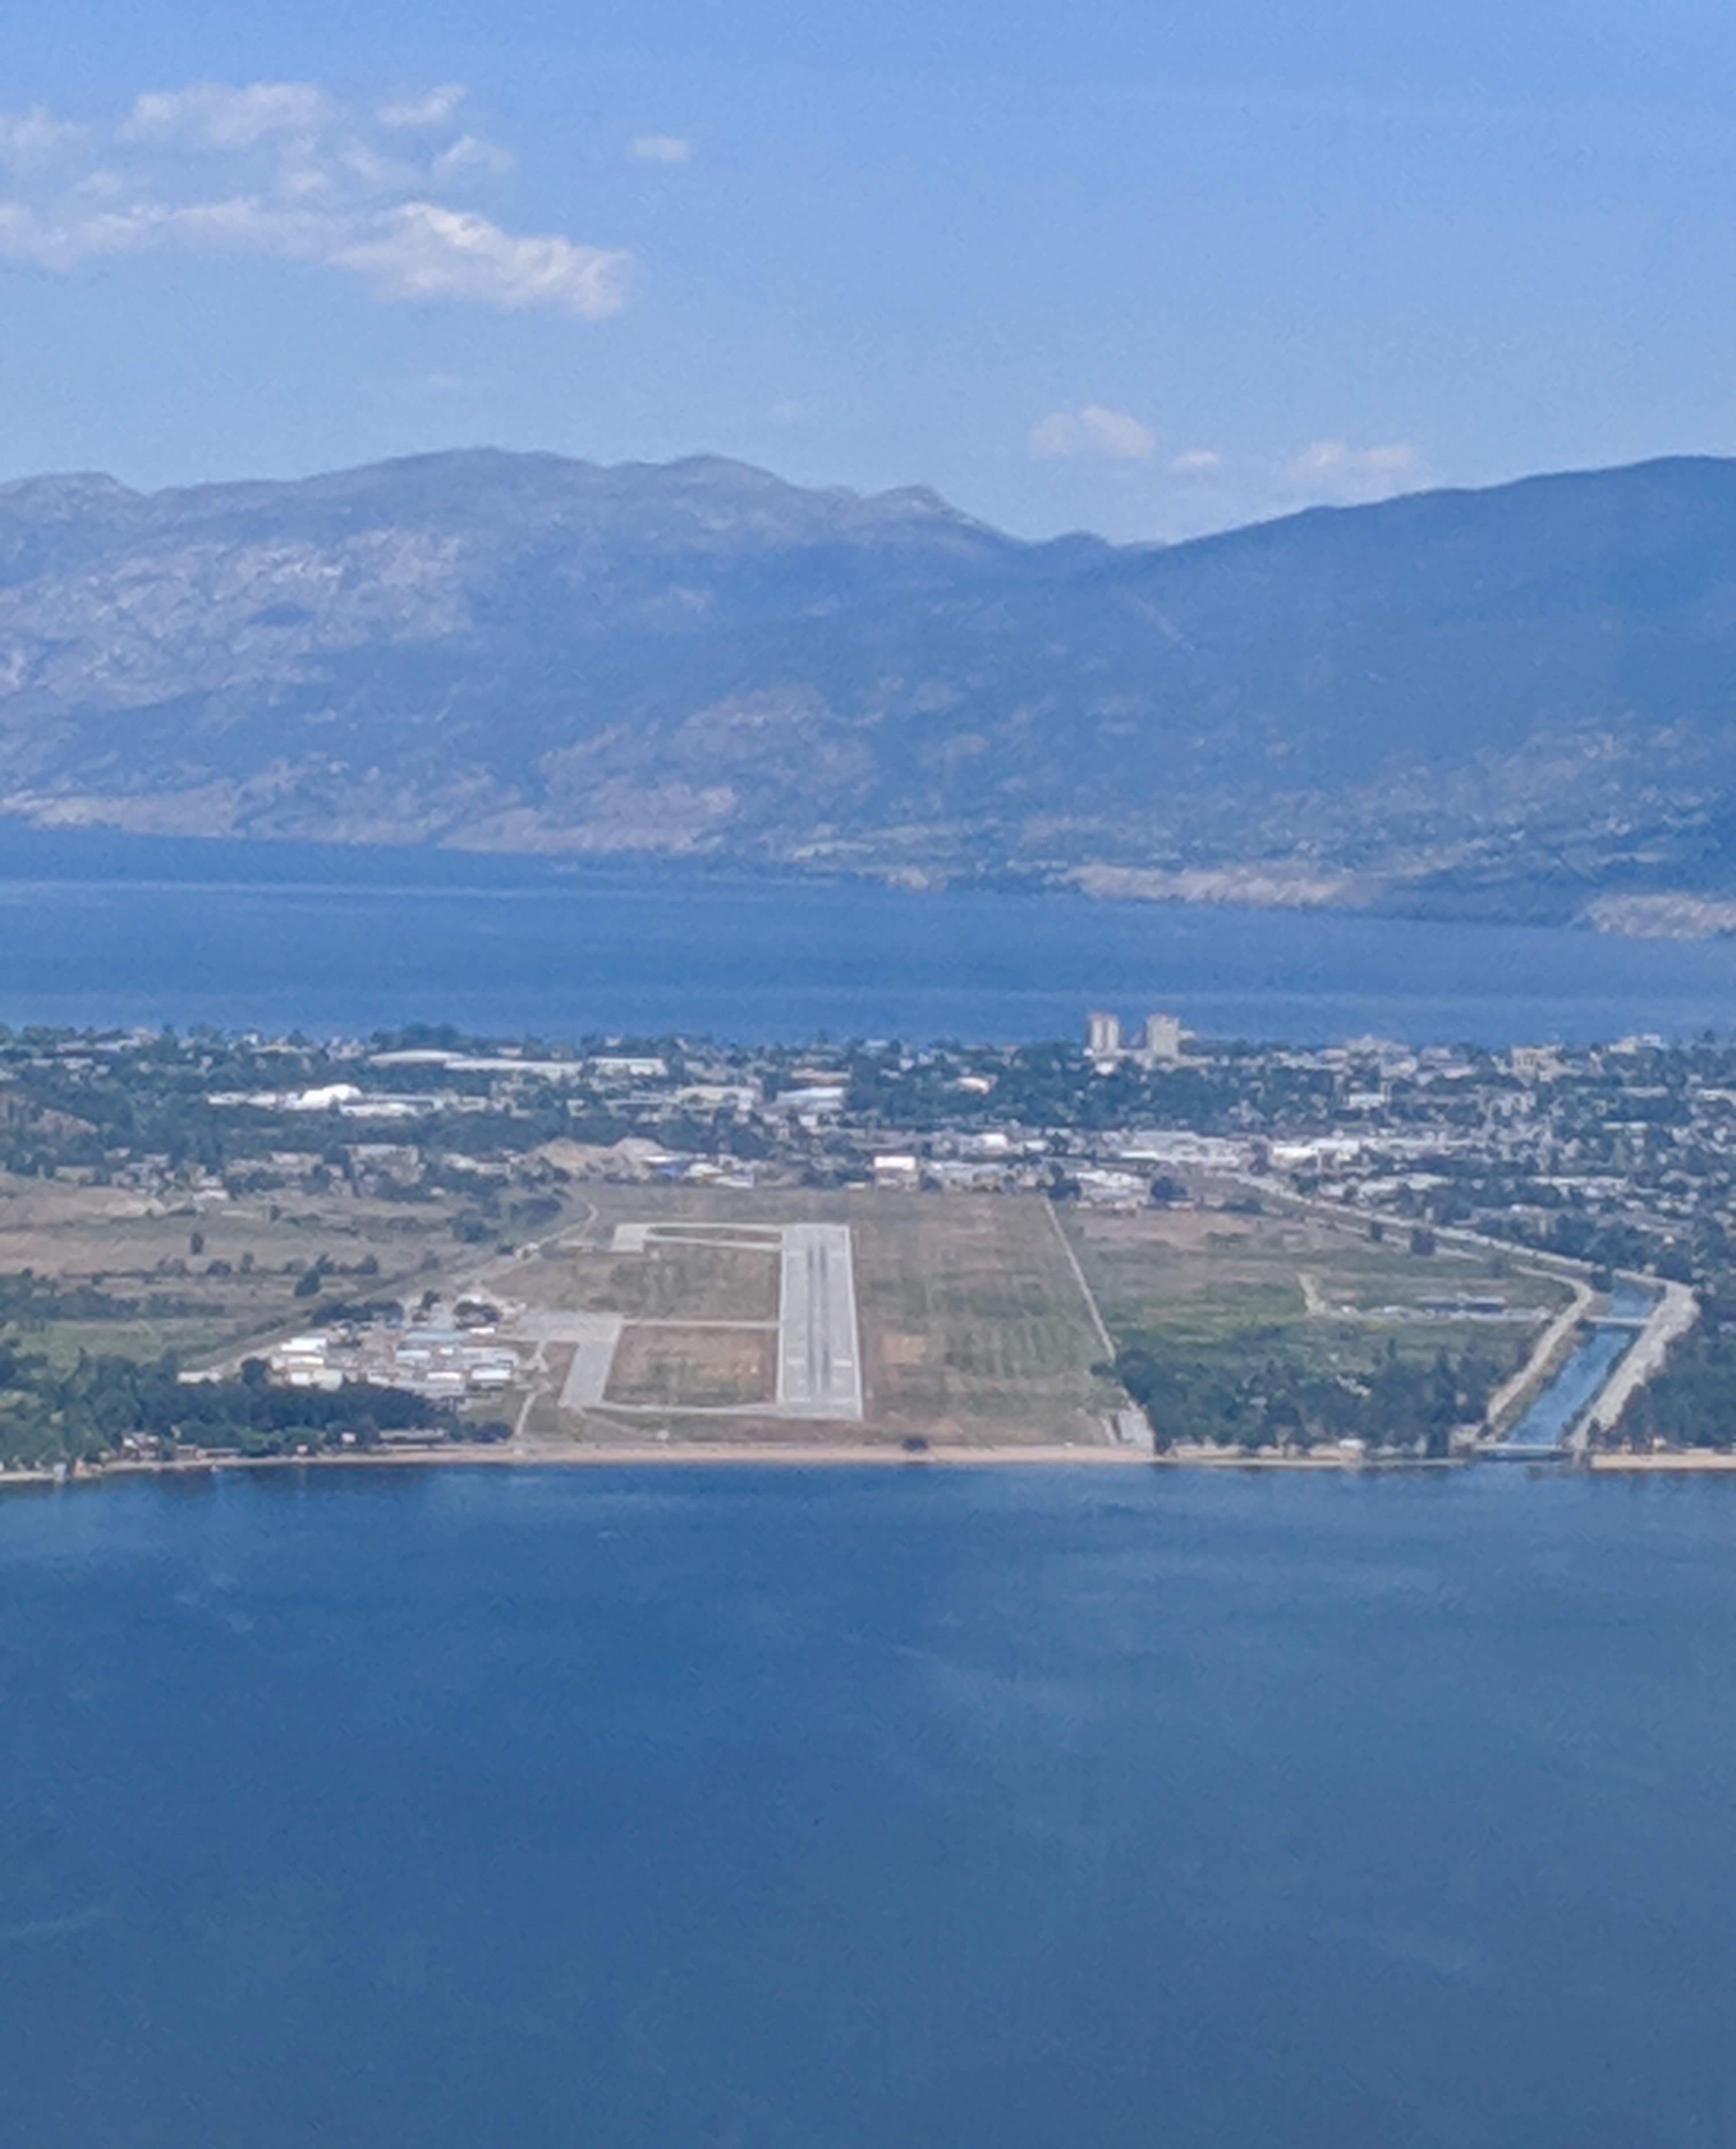 An aerial photograph of an airport runway